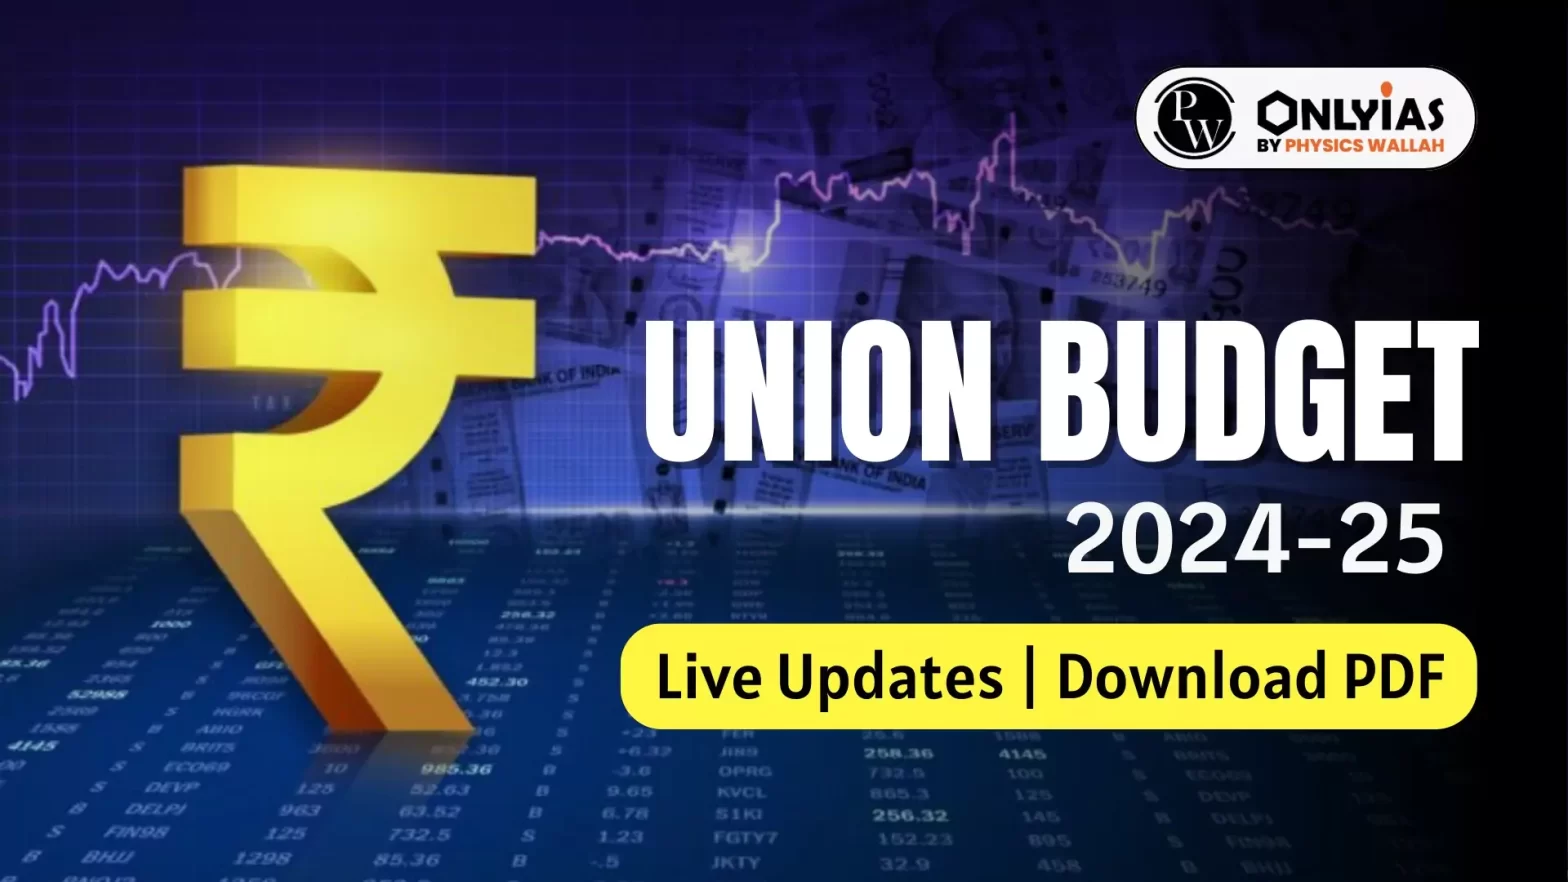 Union Budget 202425 Live Updates Download PDF PWOnlyIAS